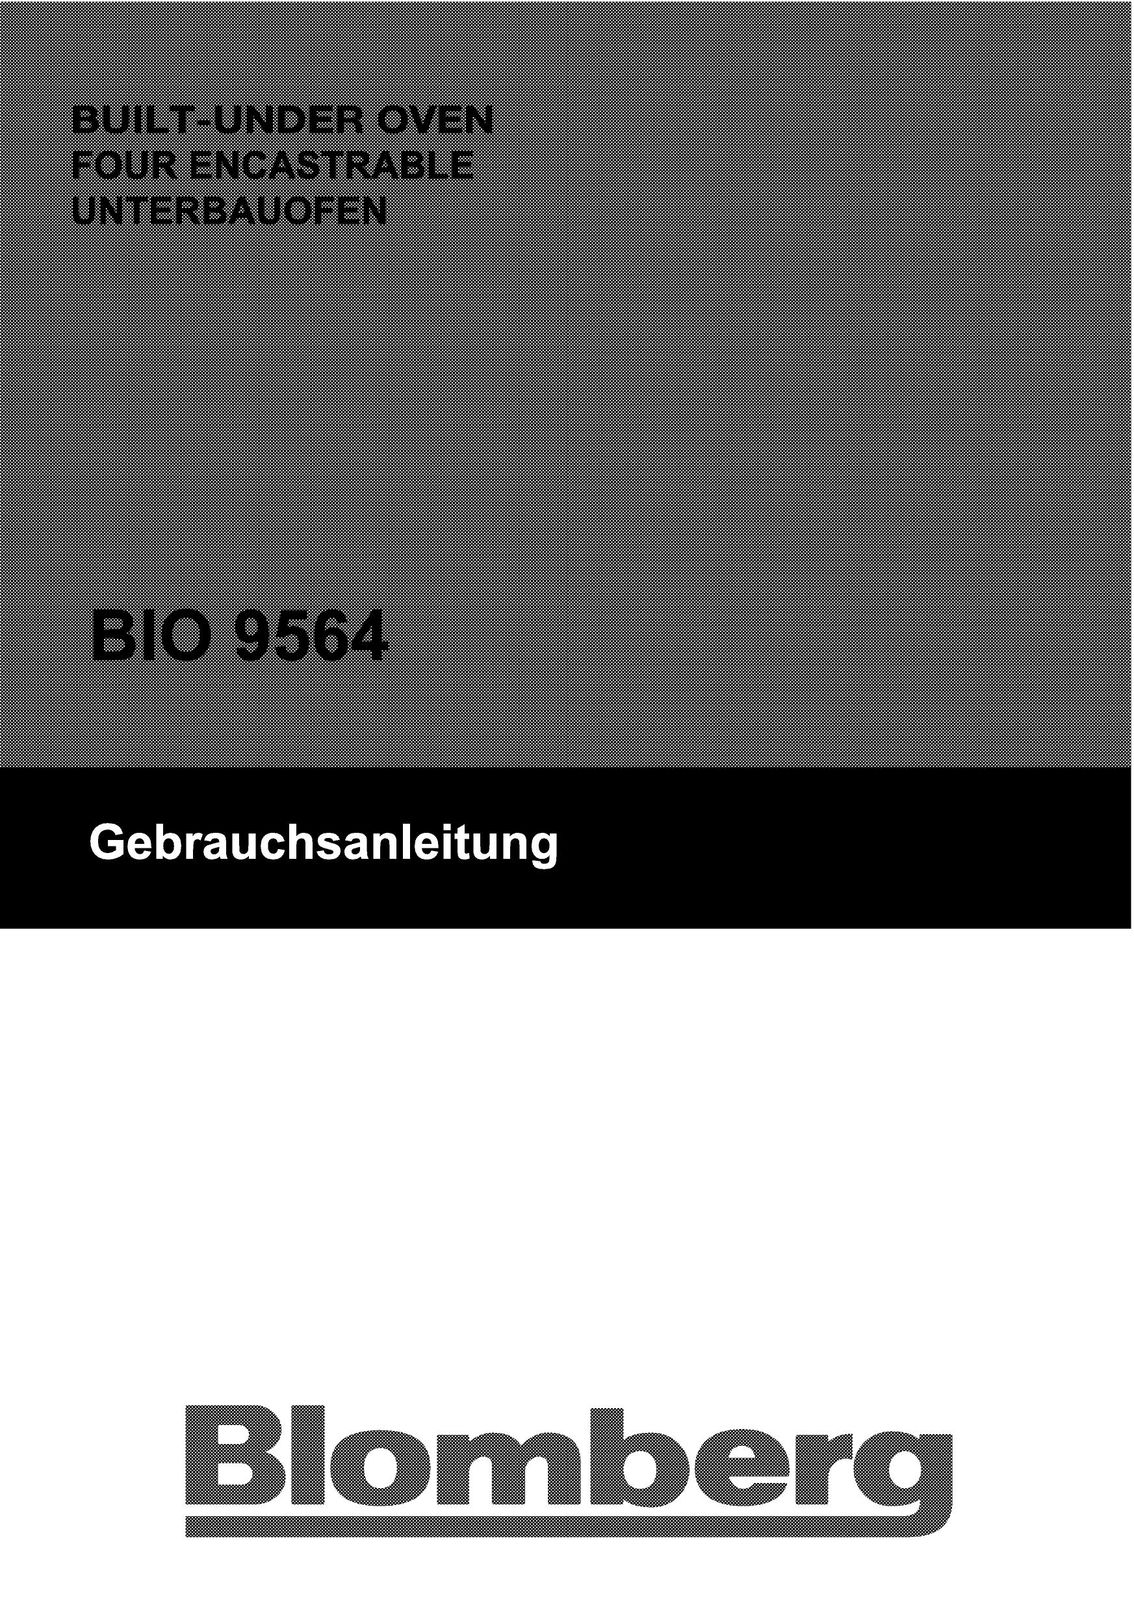 Blomberg BIO 9564 Double Oven User Manual